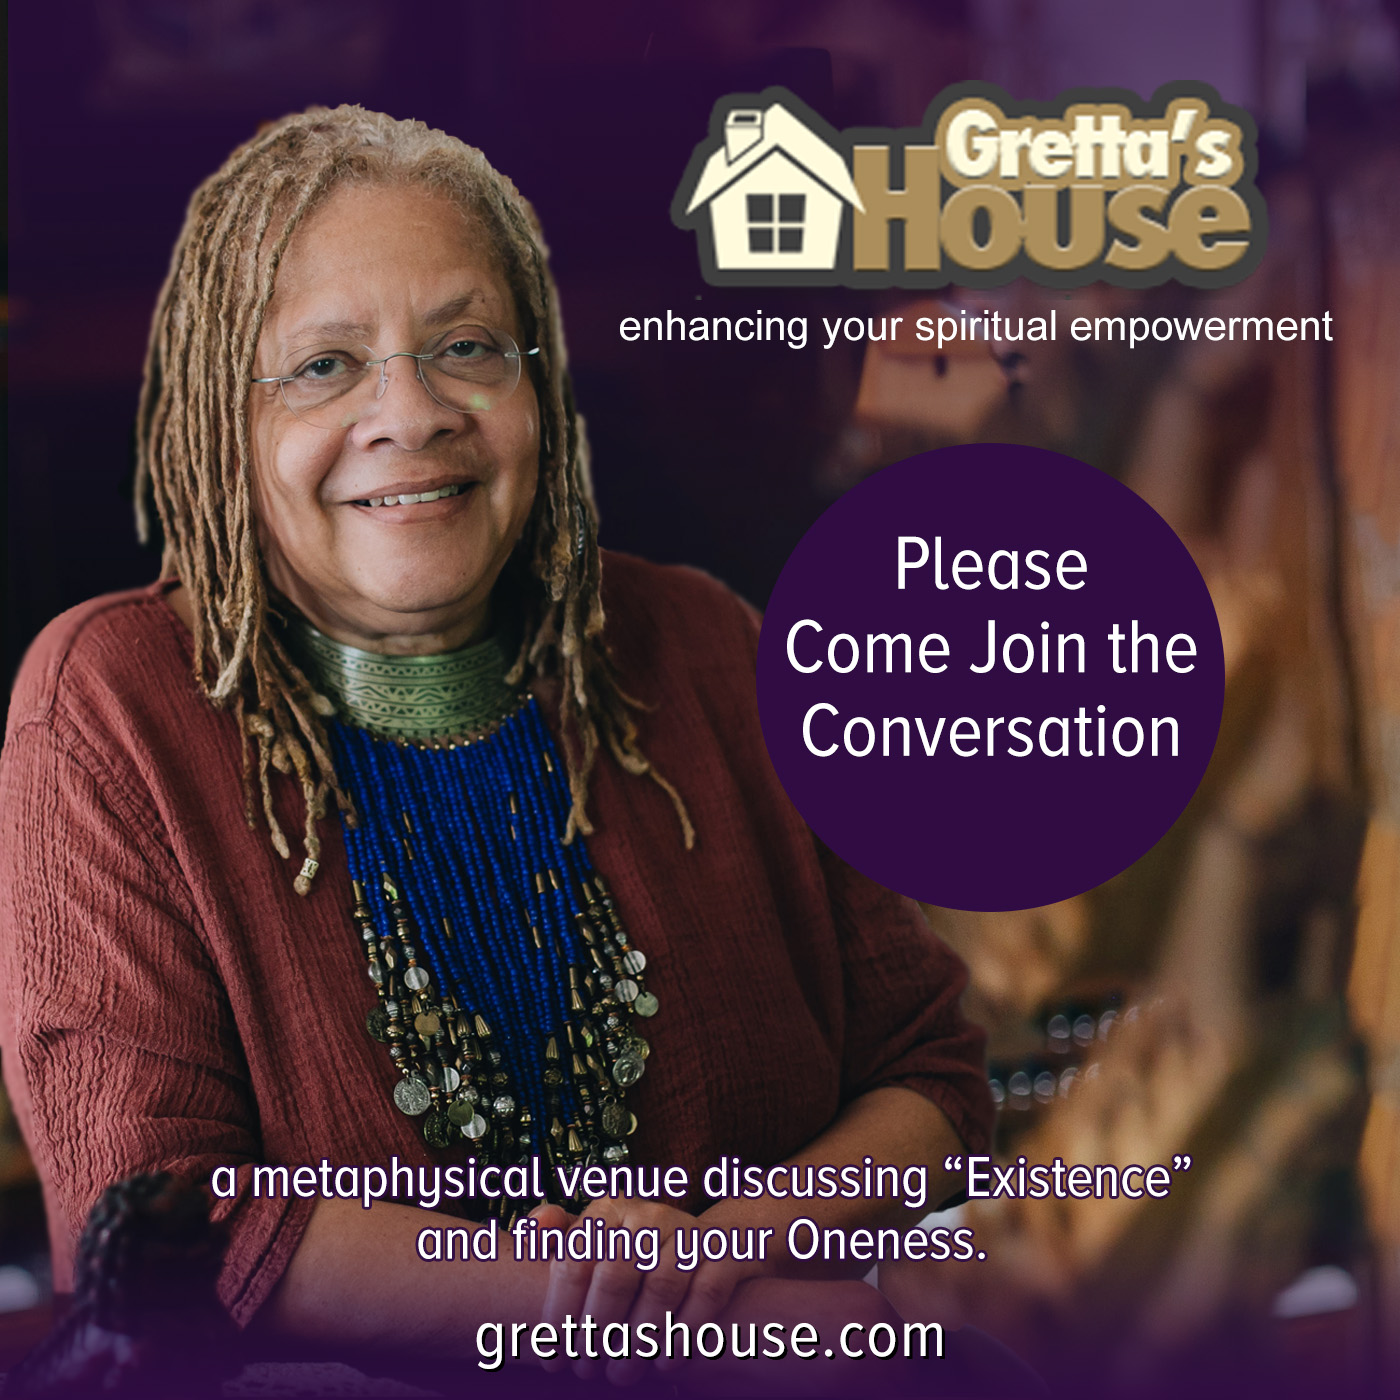 Gretta's House - enhancing your spiritual empowerment